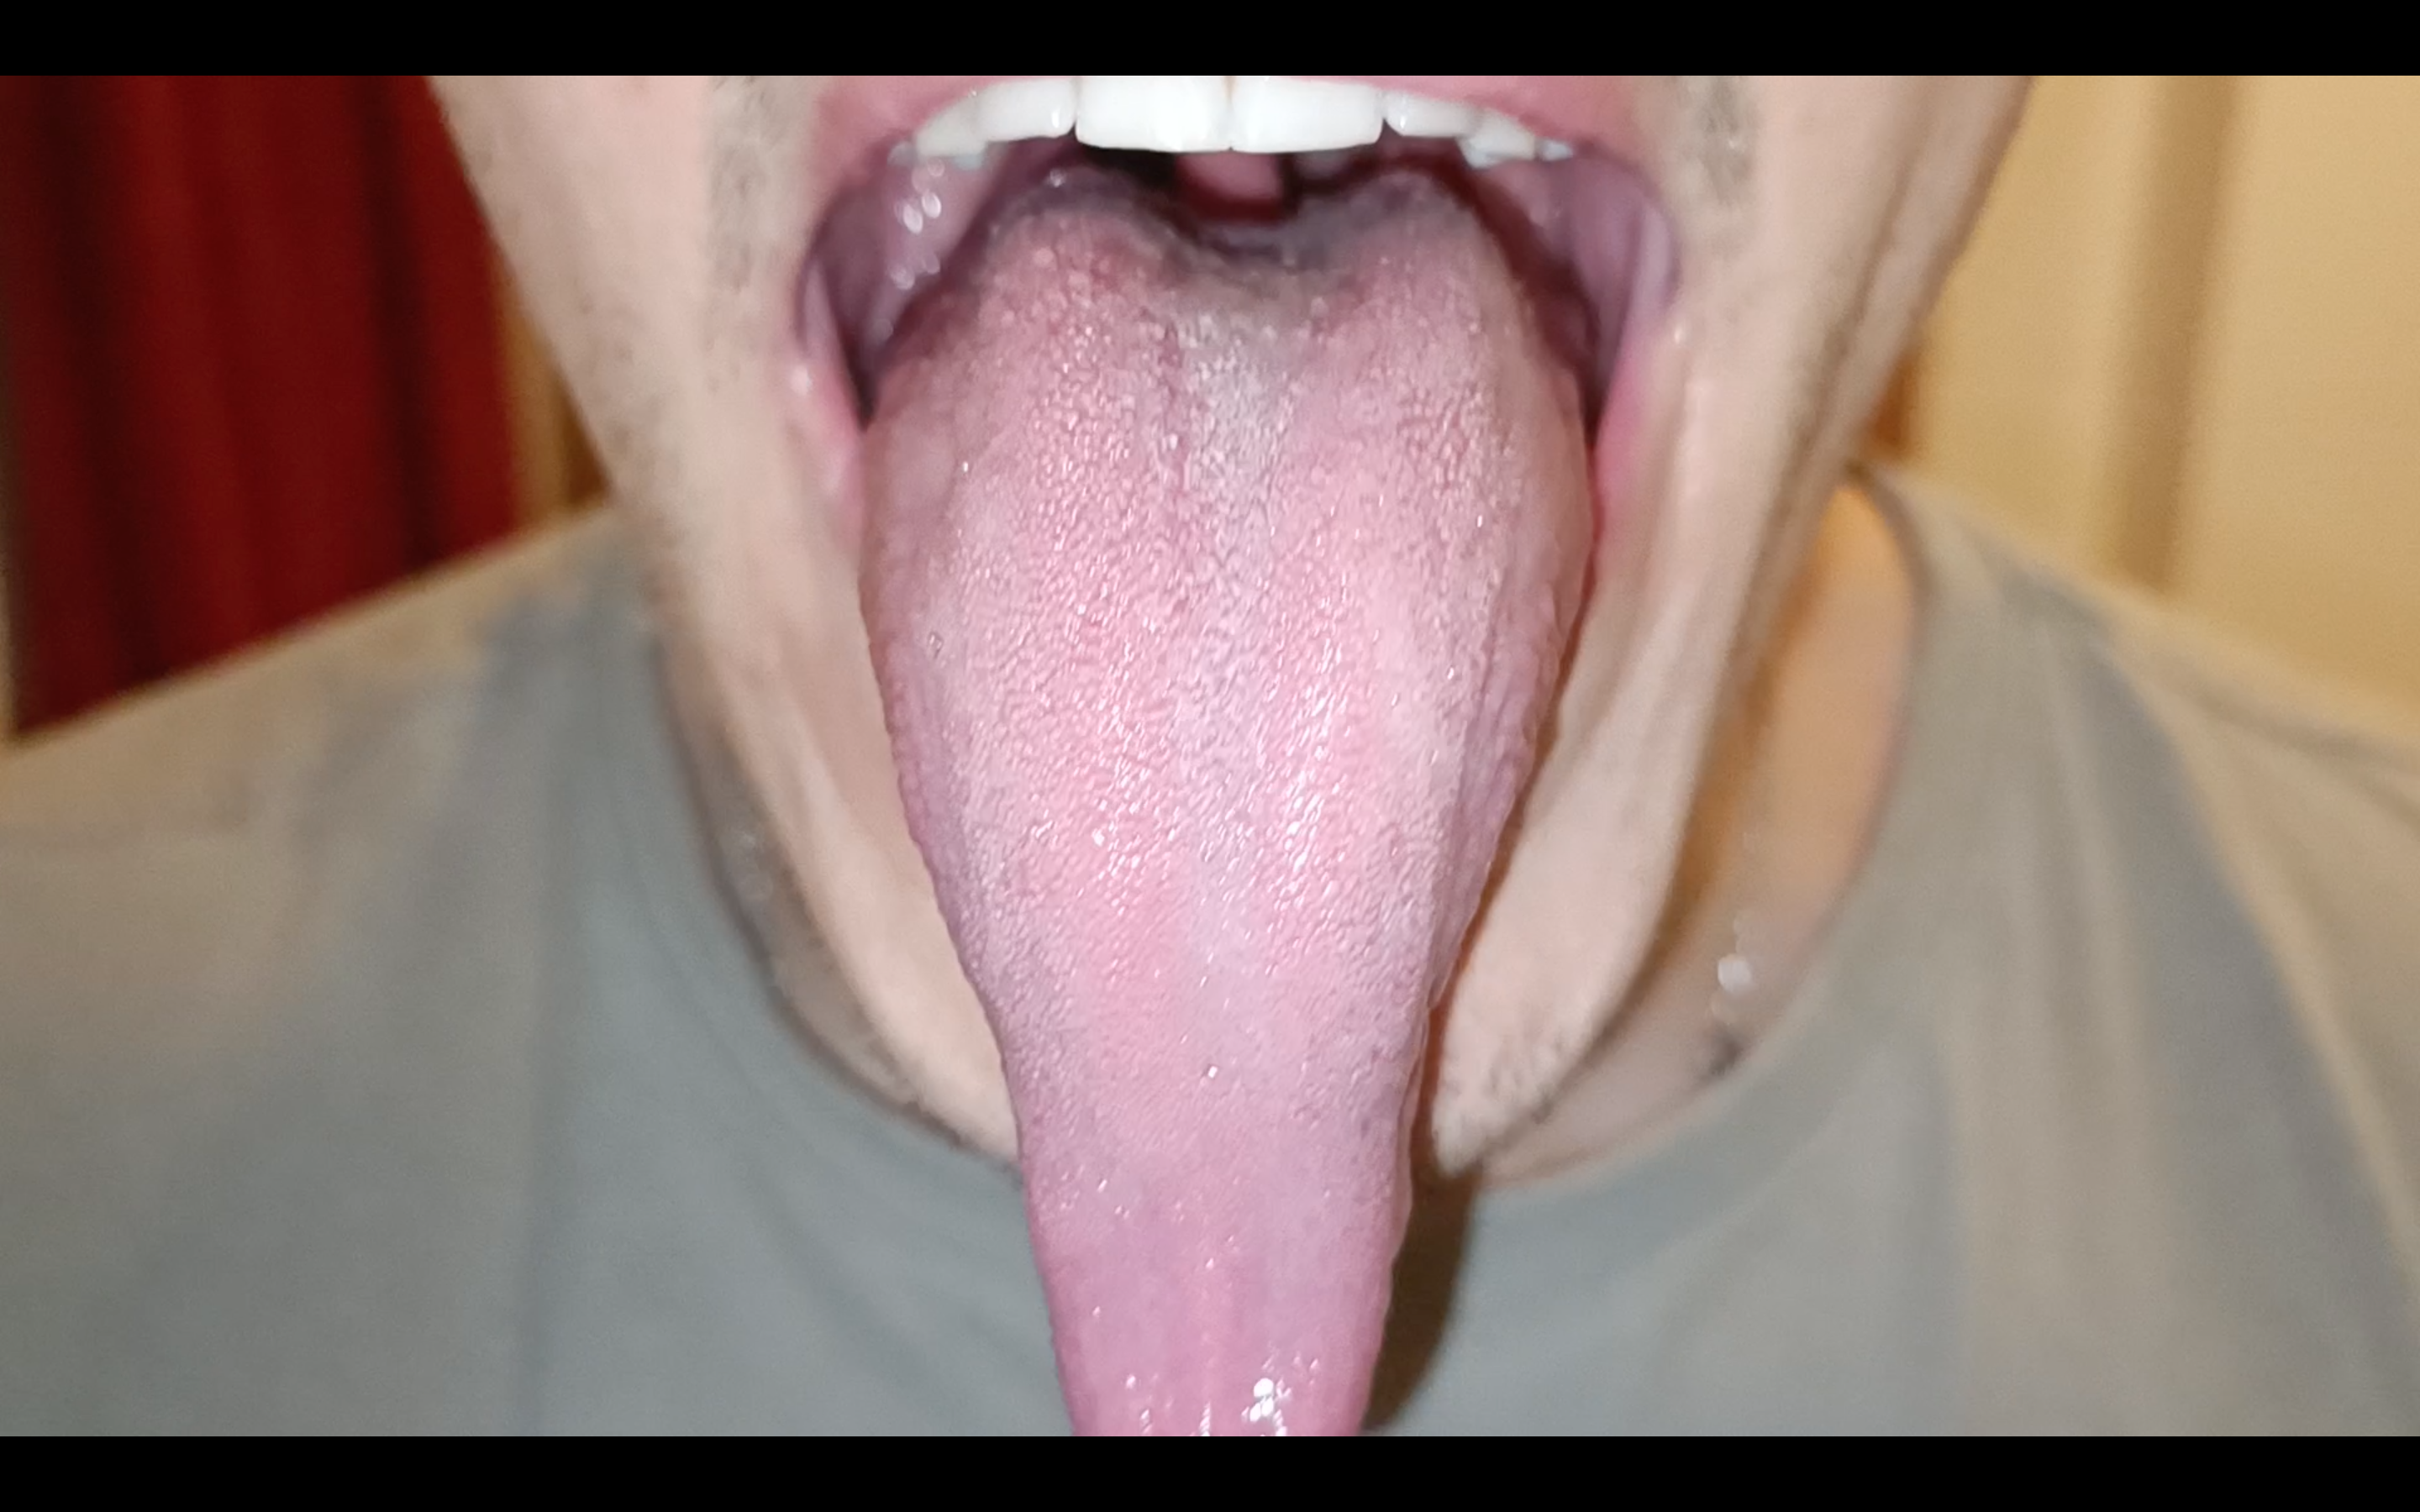 My Brazilian Friend's Huge Tongue 2